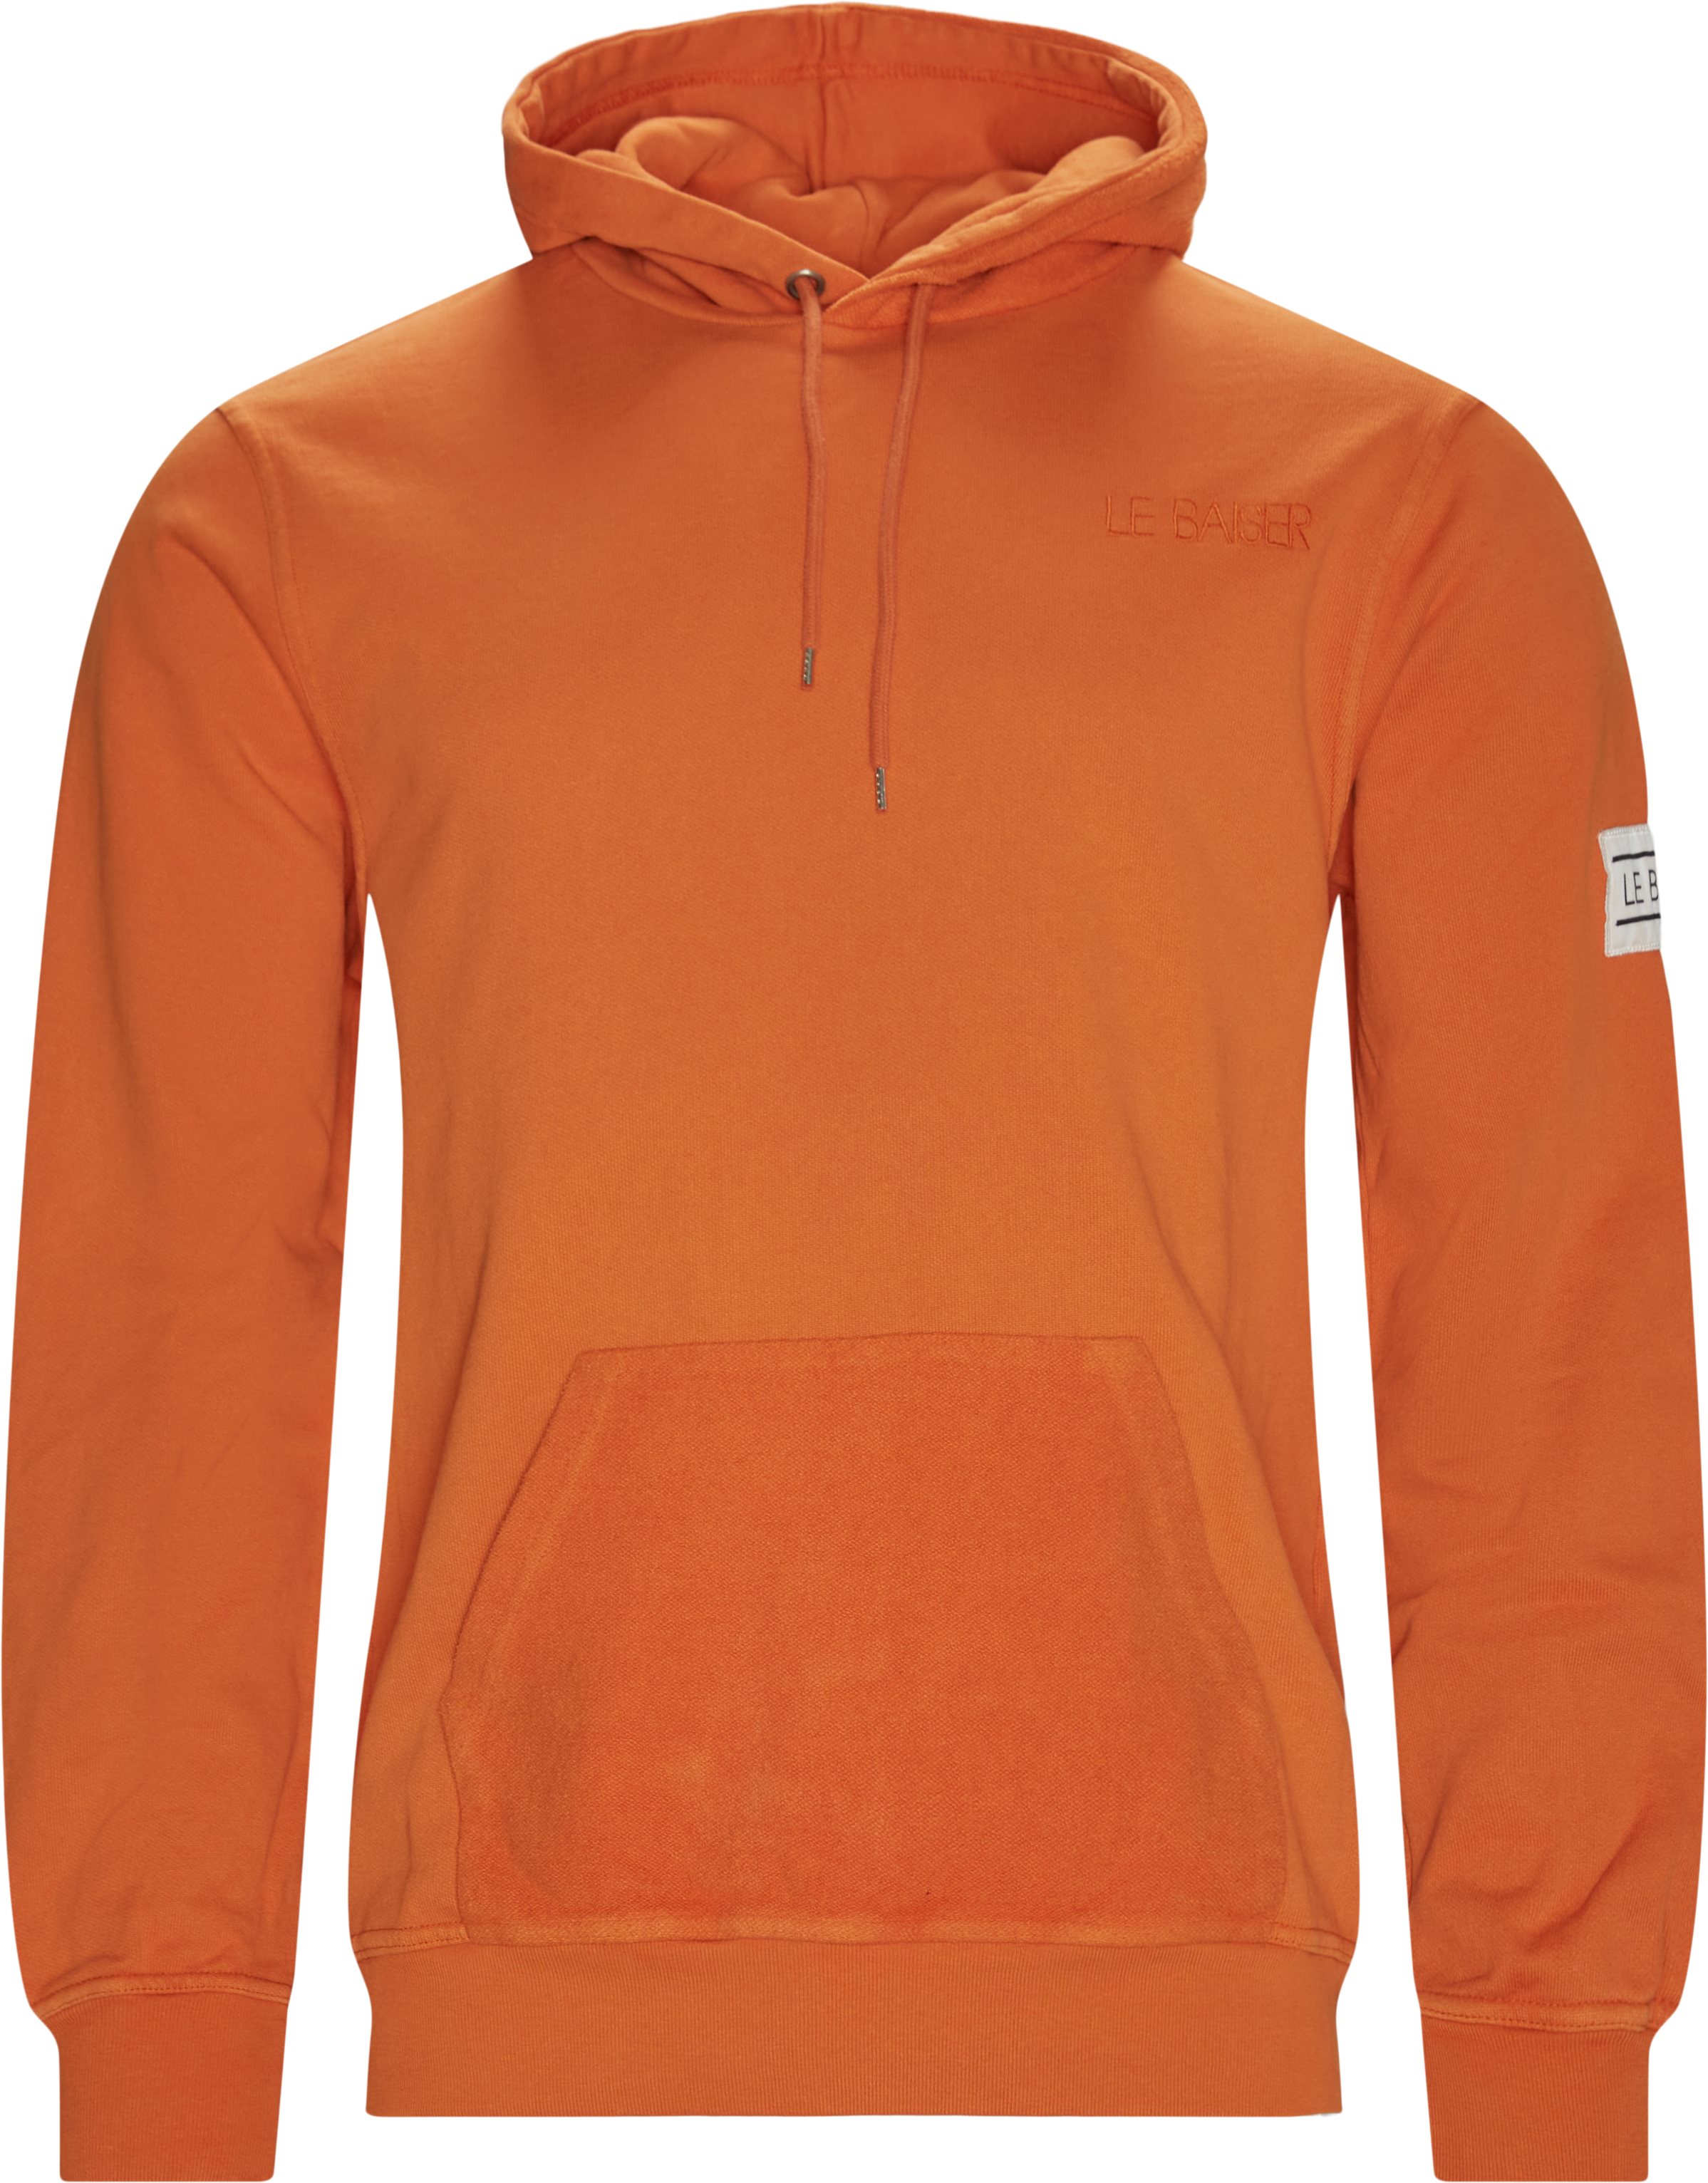 Le Baiser Sweatshirts BORGO Orange